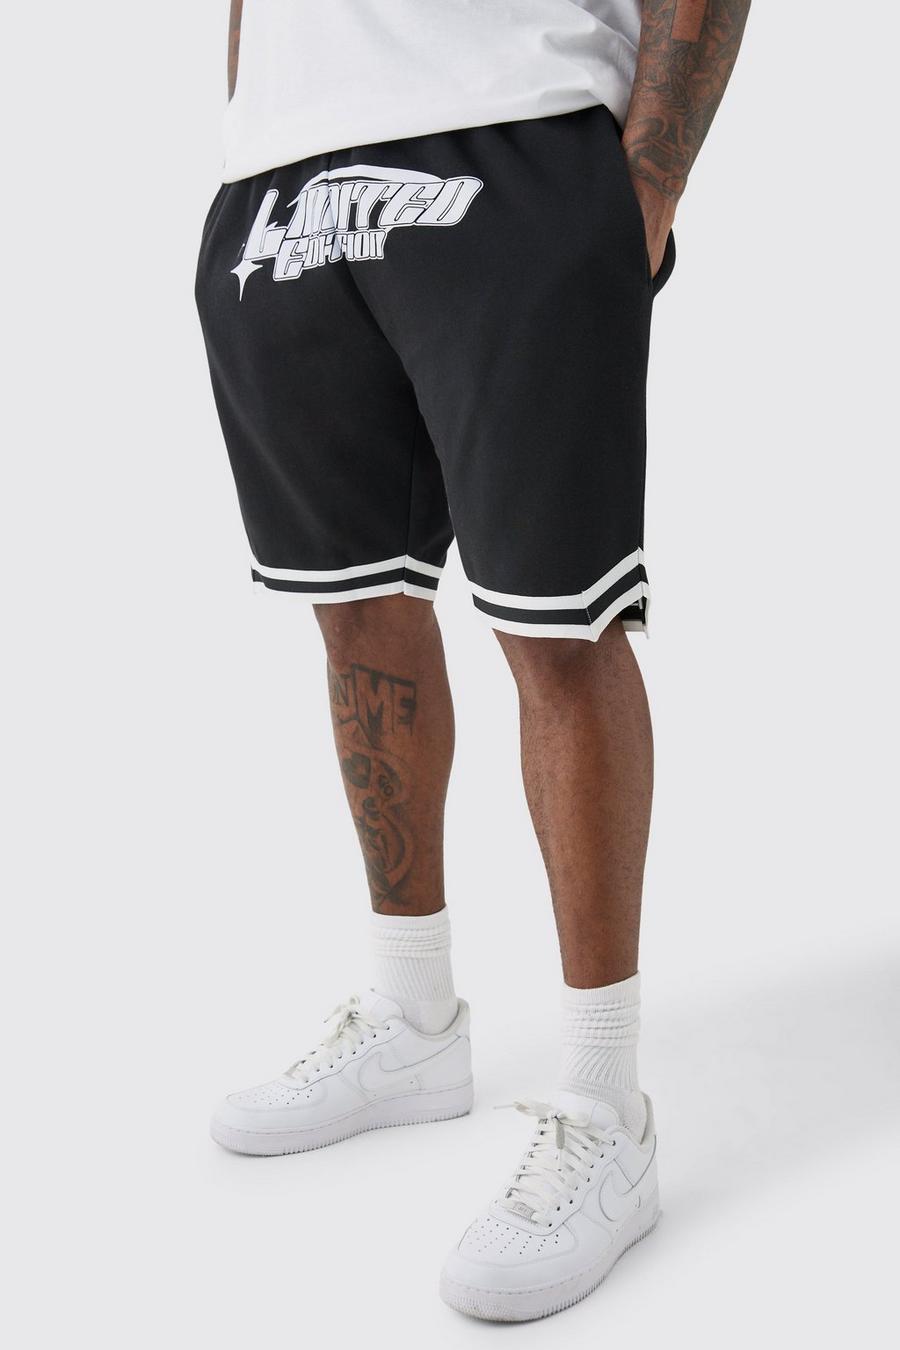 Pantalón corto Plus holgado negro de baloncesto Limited Edition, Black image number 1